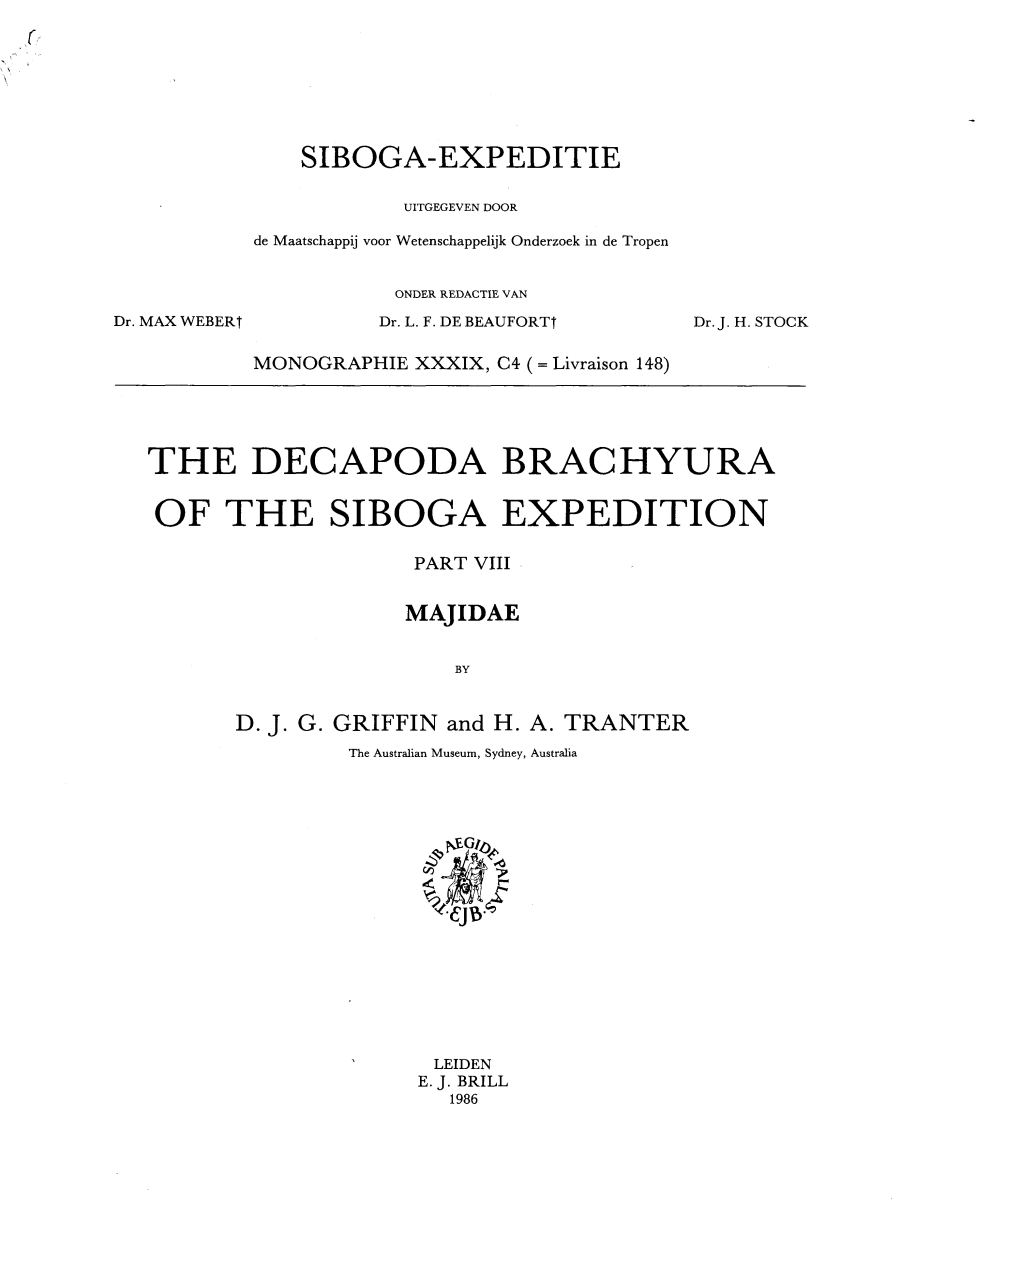 The Decapoda Brachyura of the Siboga Expedition Part Viii